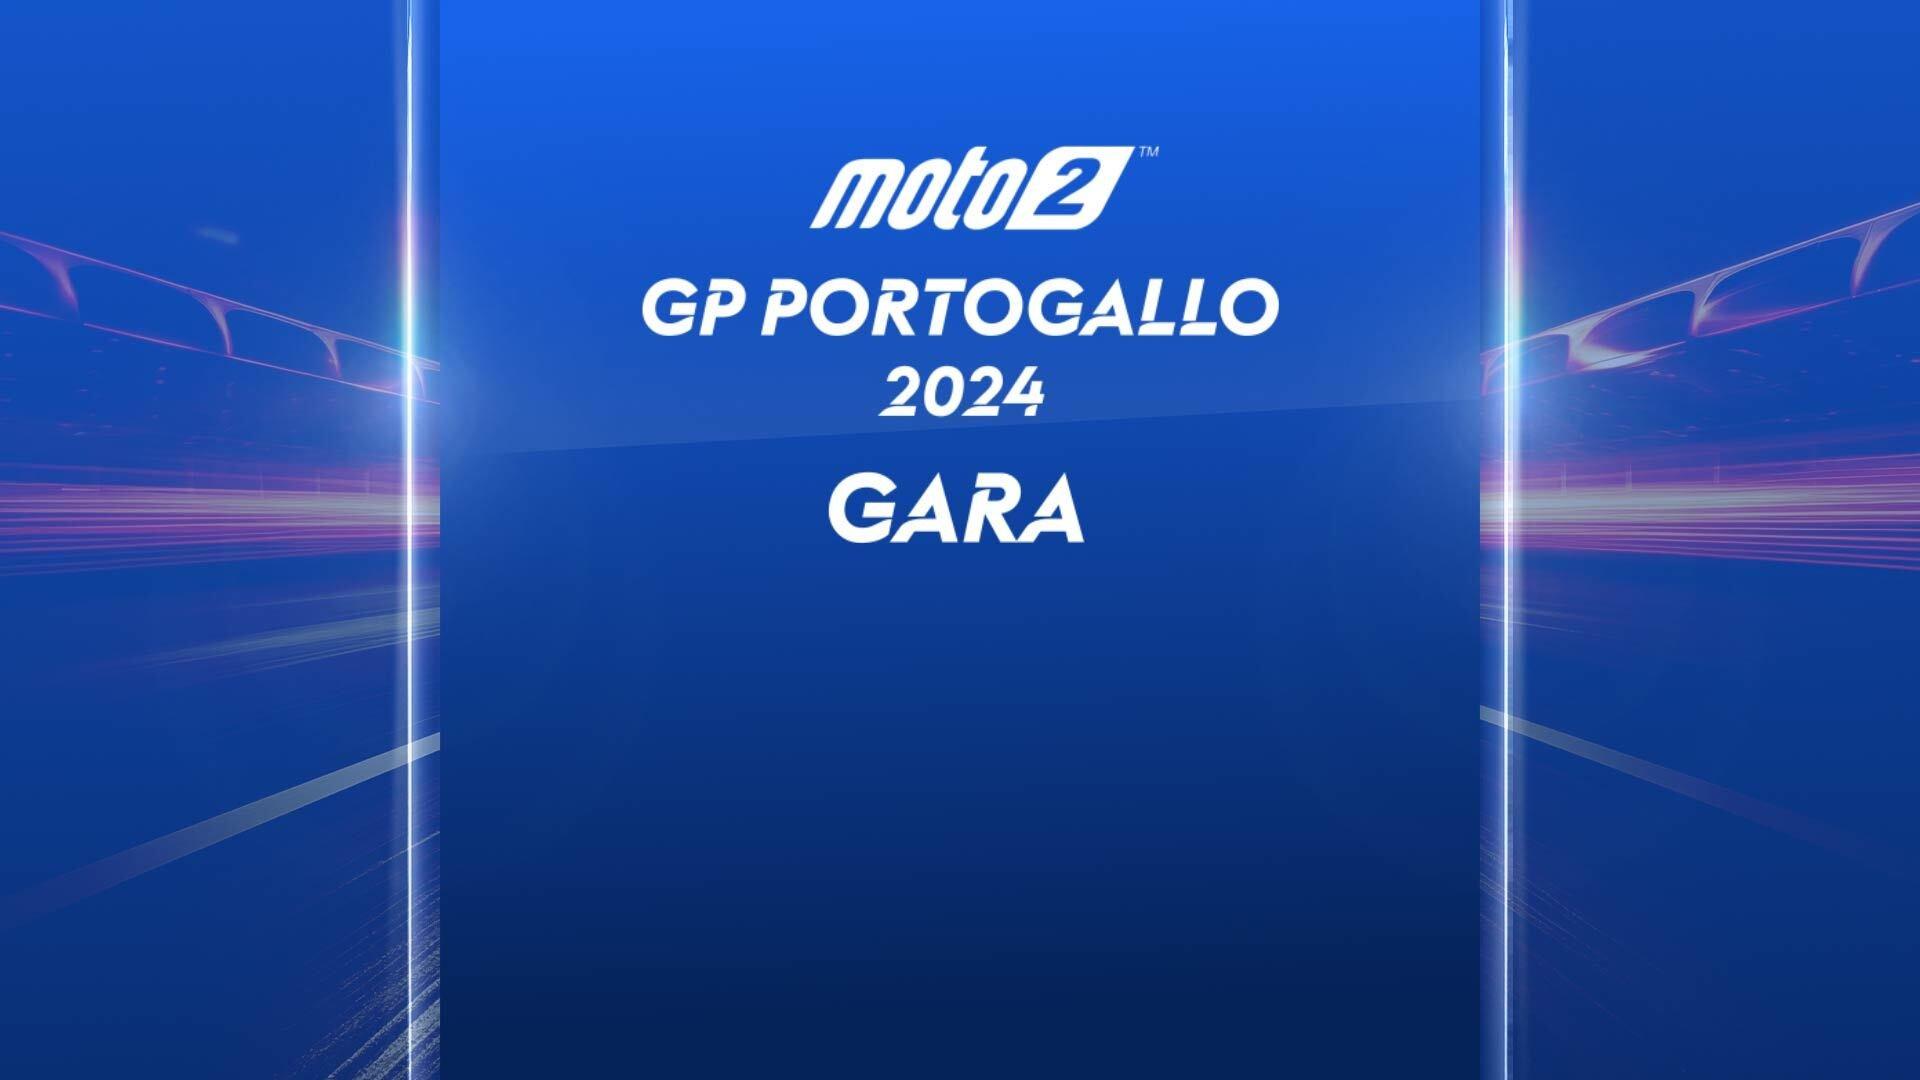 Moto2 Gara: GP Portogallo